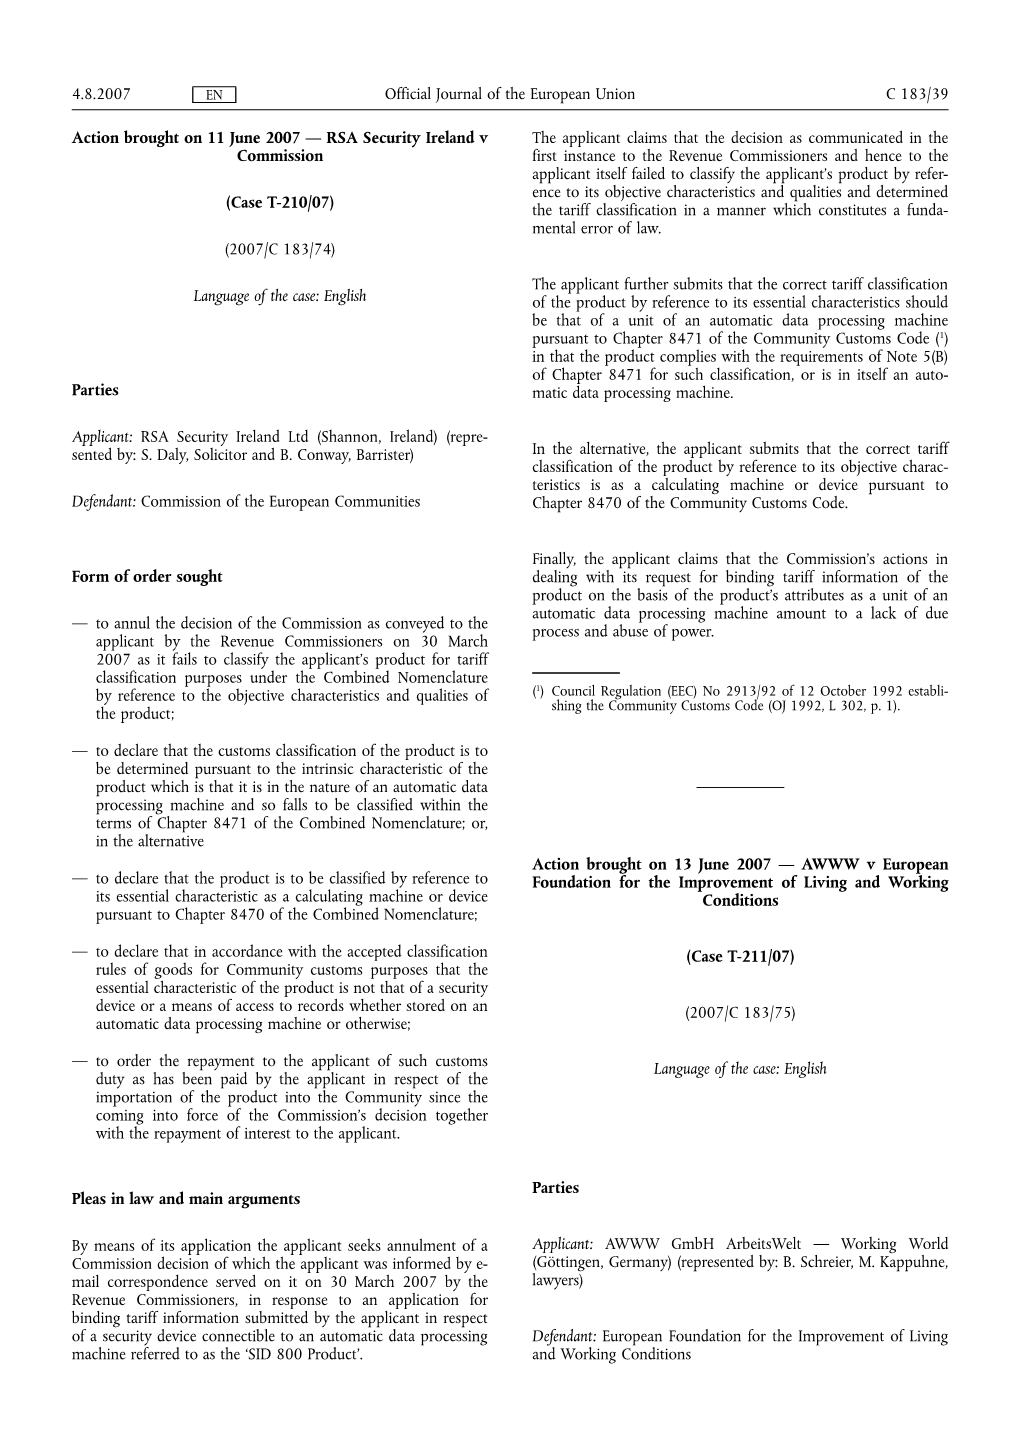 RSA Security Ireland V Commission (Case T-210/07) (2007